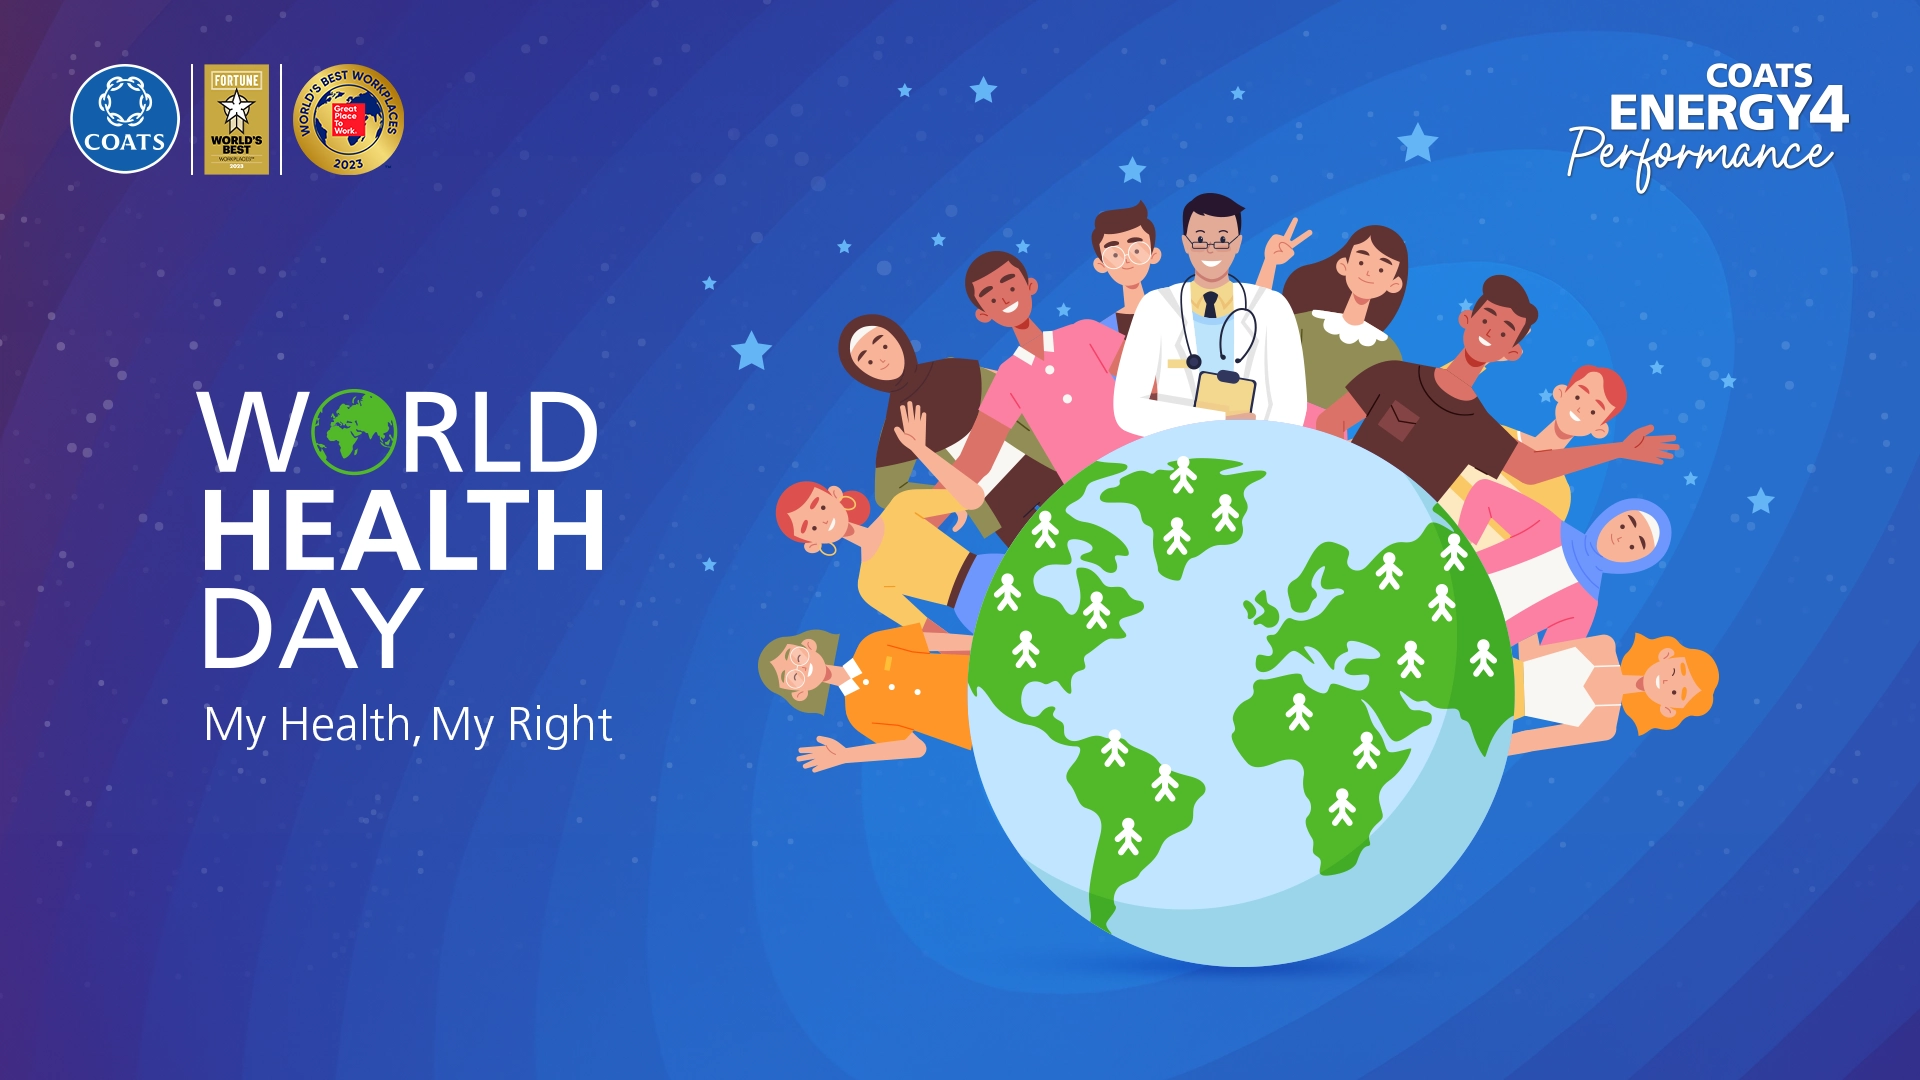 Celebrating World Health Day Together